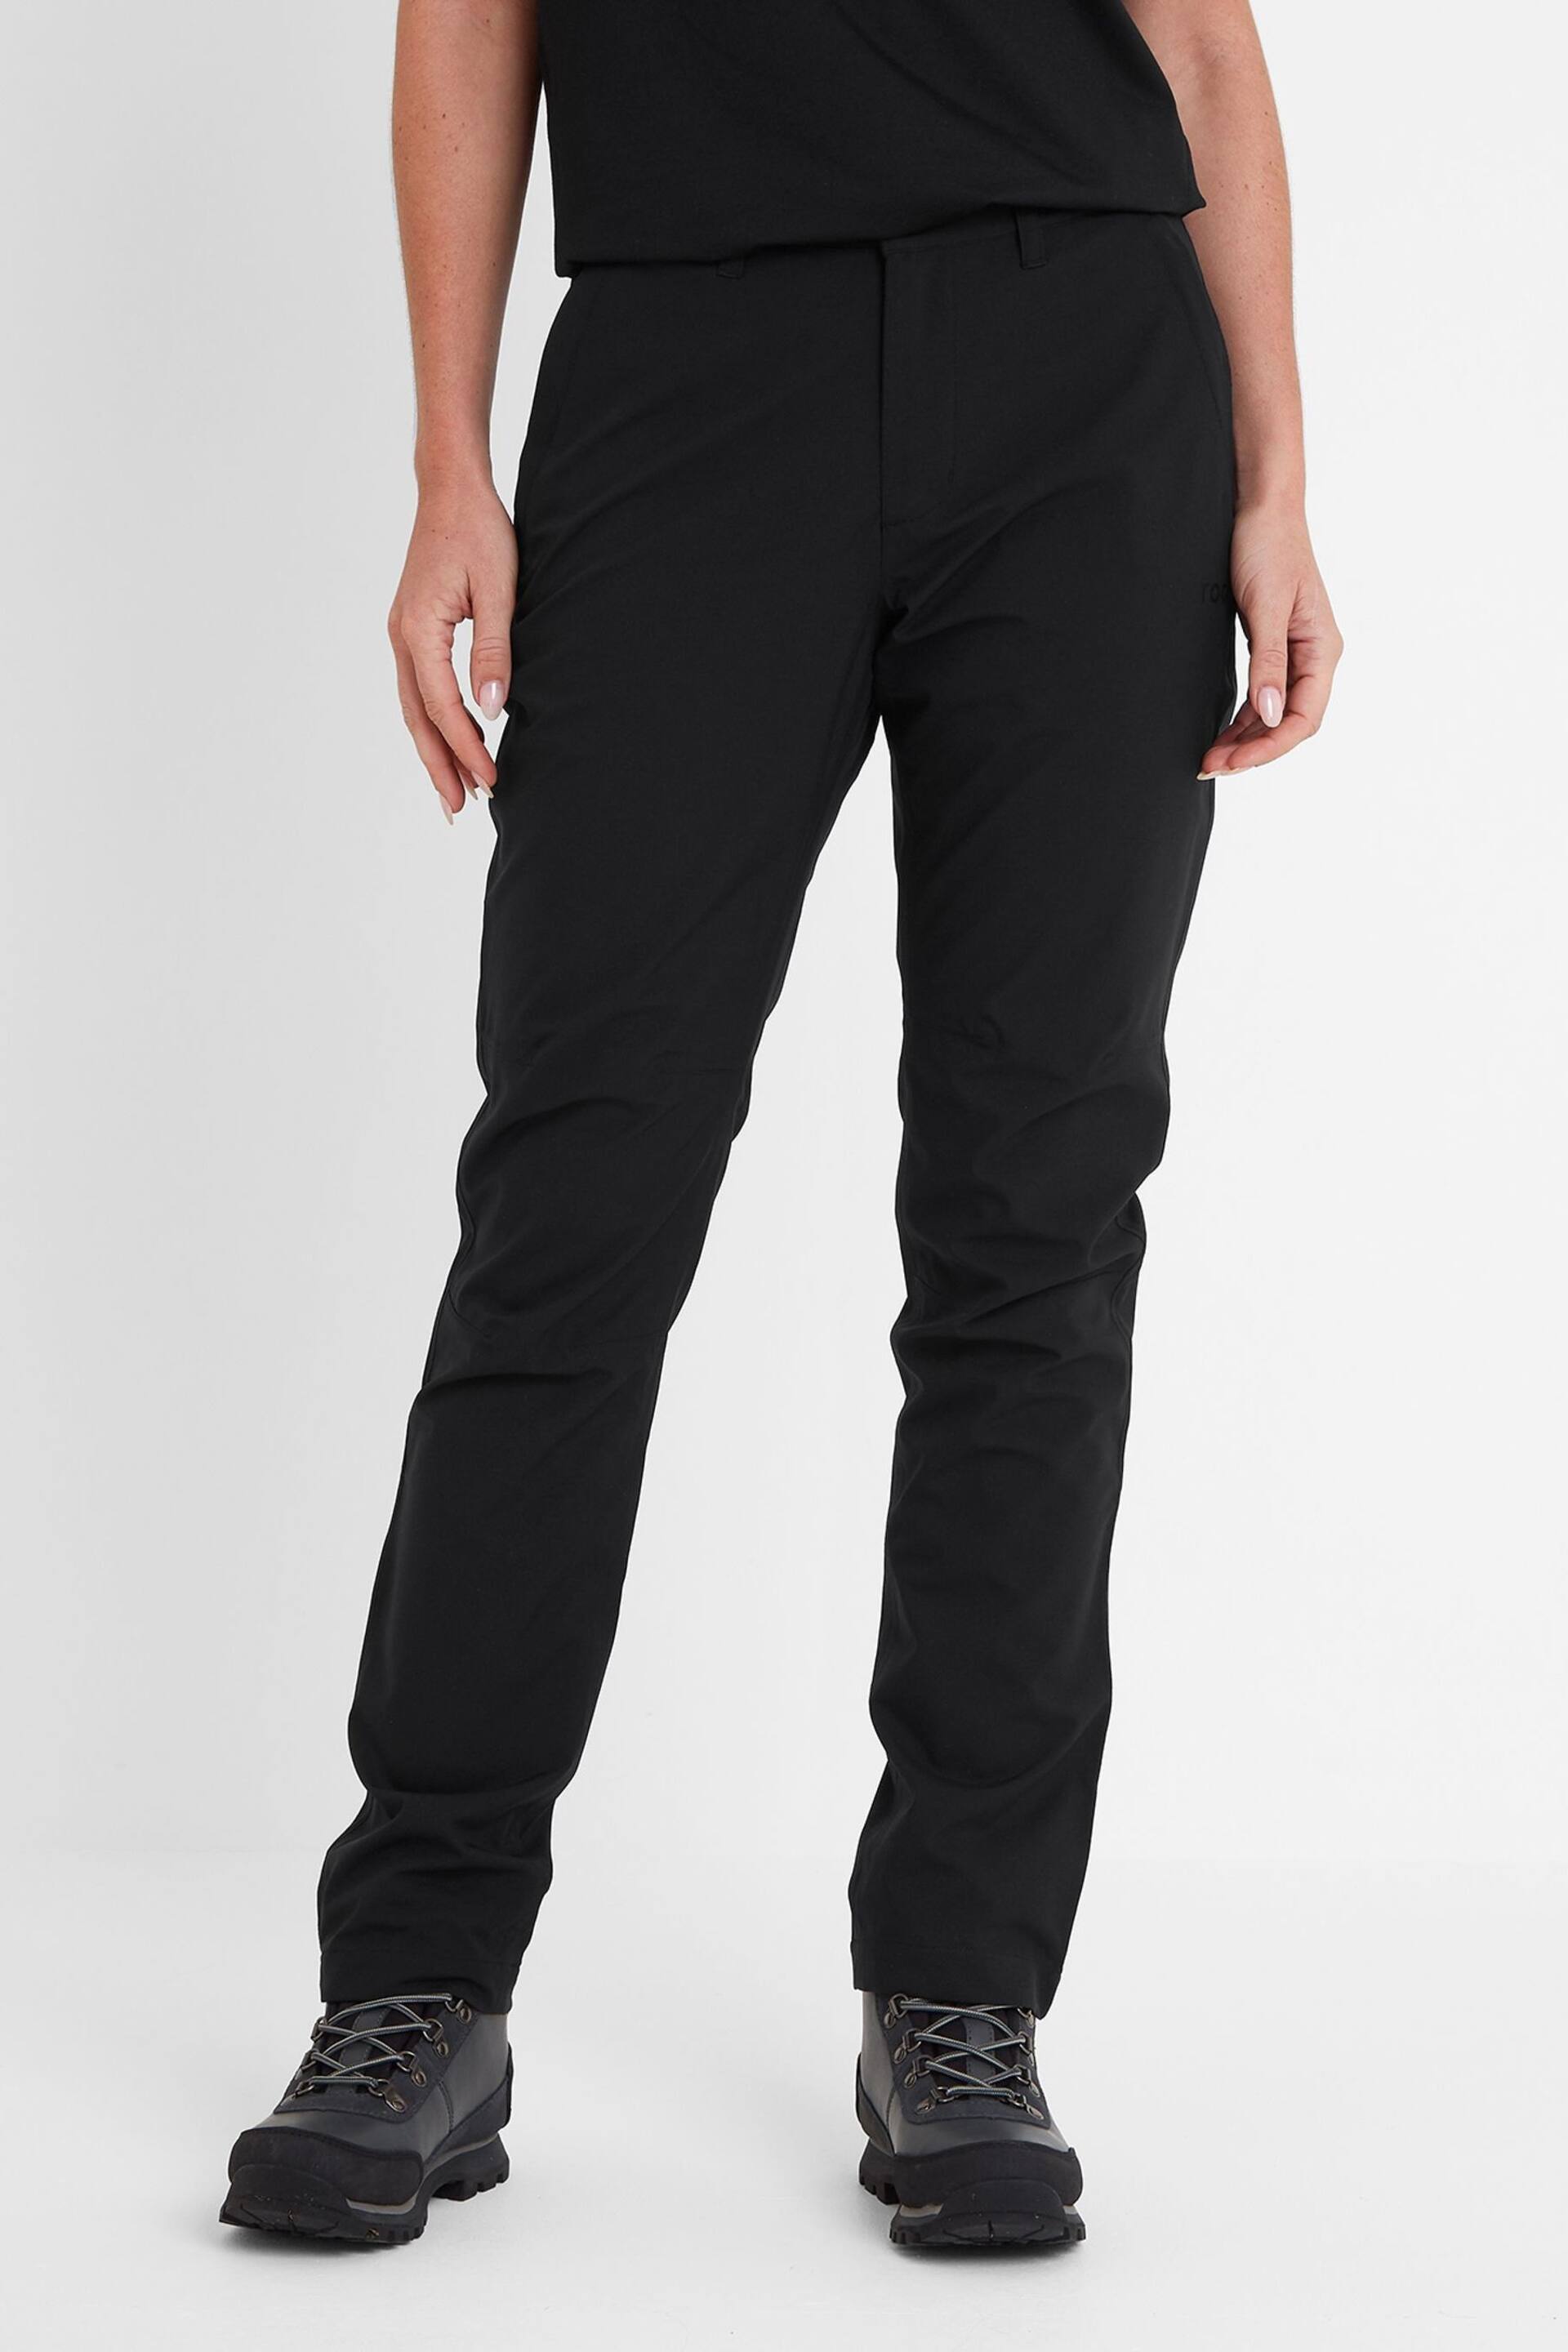 Tog 24 Black Silsden Waterproof Trousers - Image 1 of 6